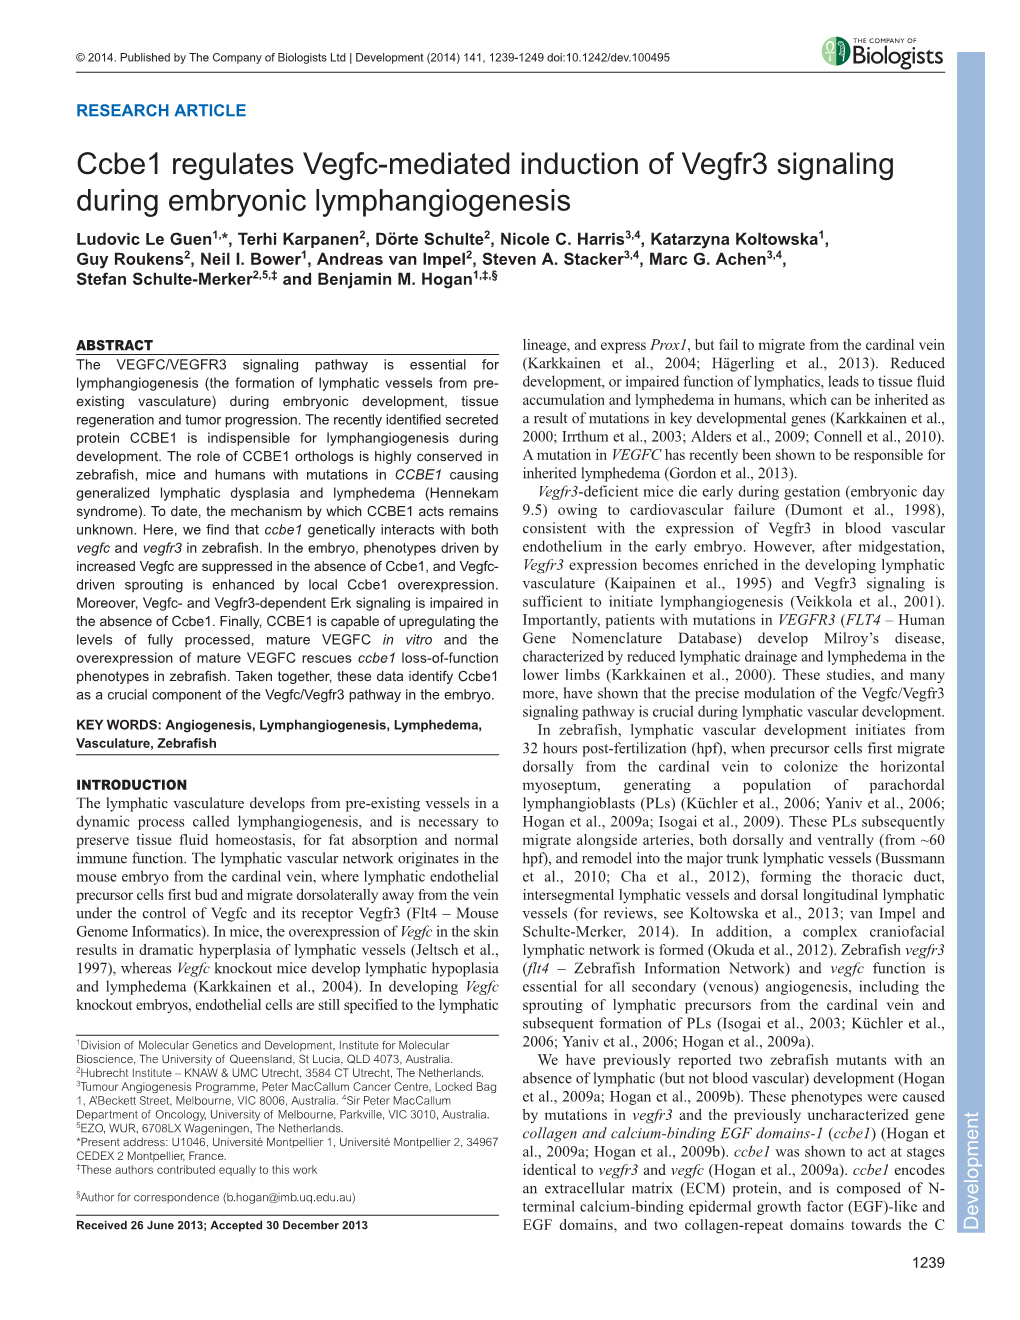 Ccbe1 Regulates Vegfc-Mediated Induction of Vegfr3 Signaling During Embryonic Lymphangiogenesis Ludovic Le Guen1,*, Terhi Karpanen2, Dörte Schulte2, Nicole C